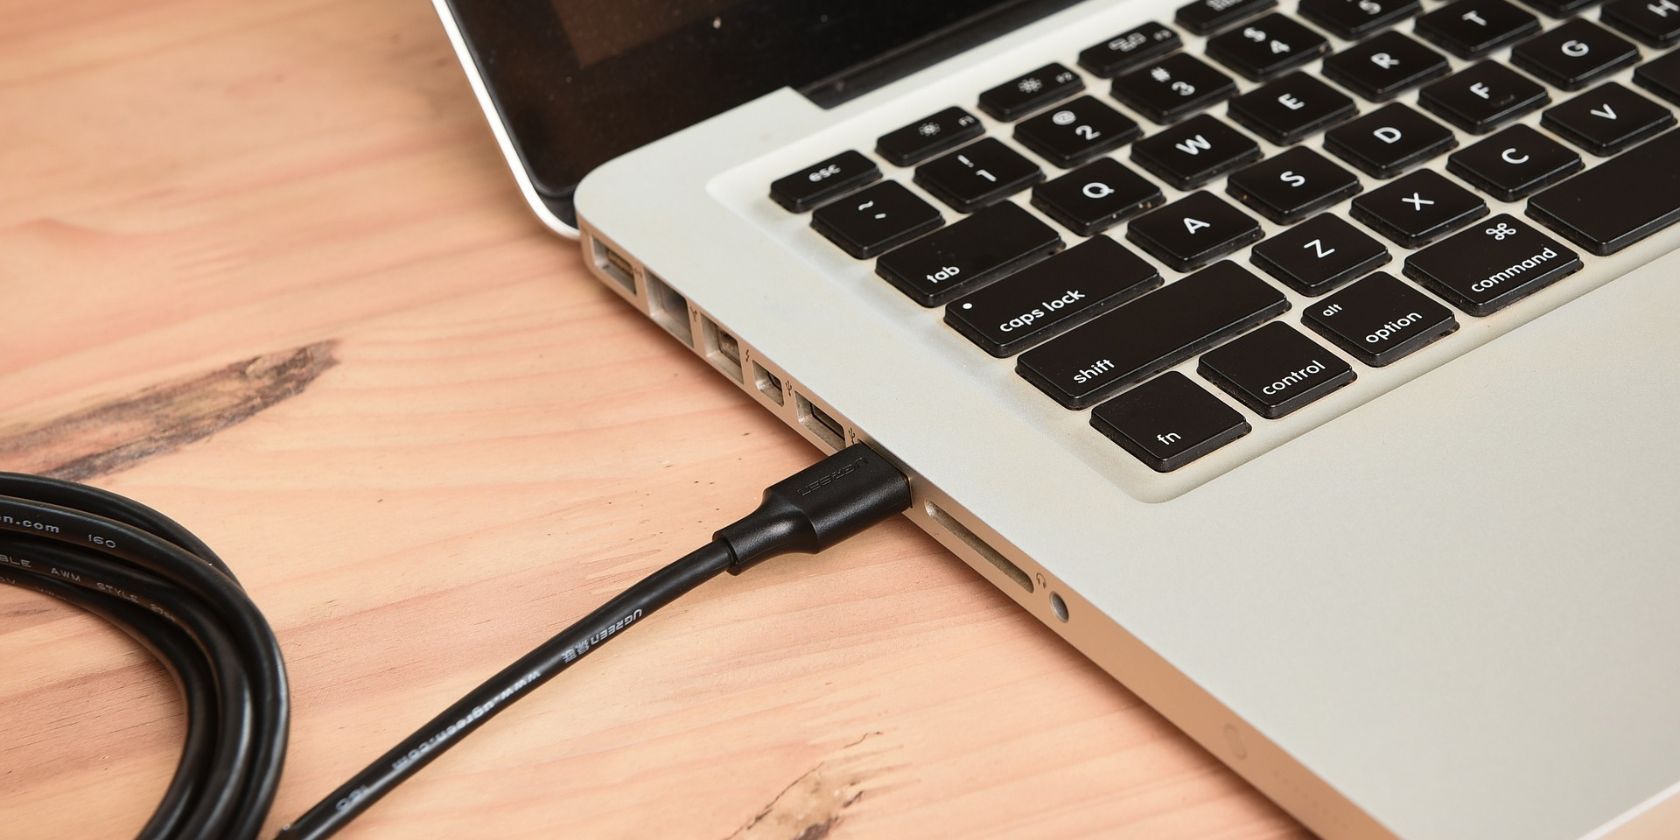 USB 电缆插入笔记本电脑的 USB 端口